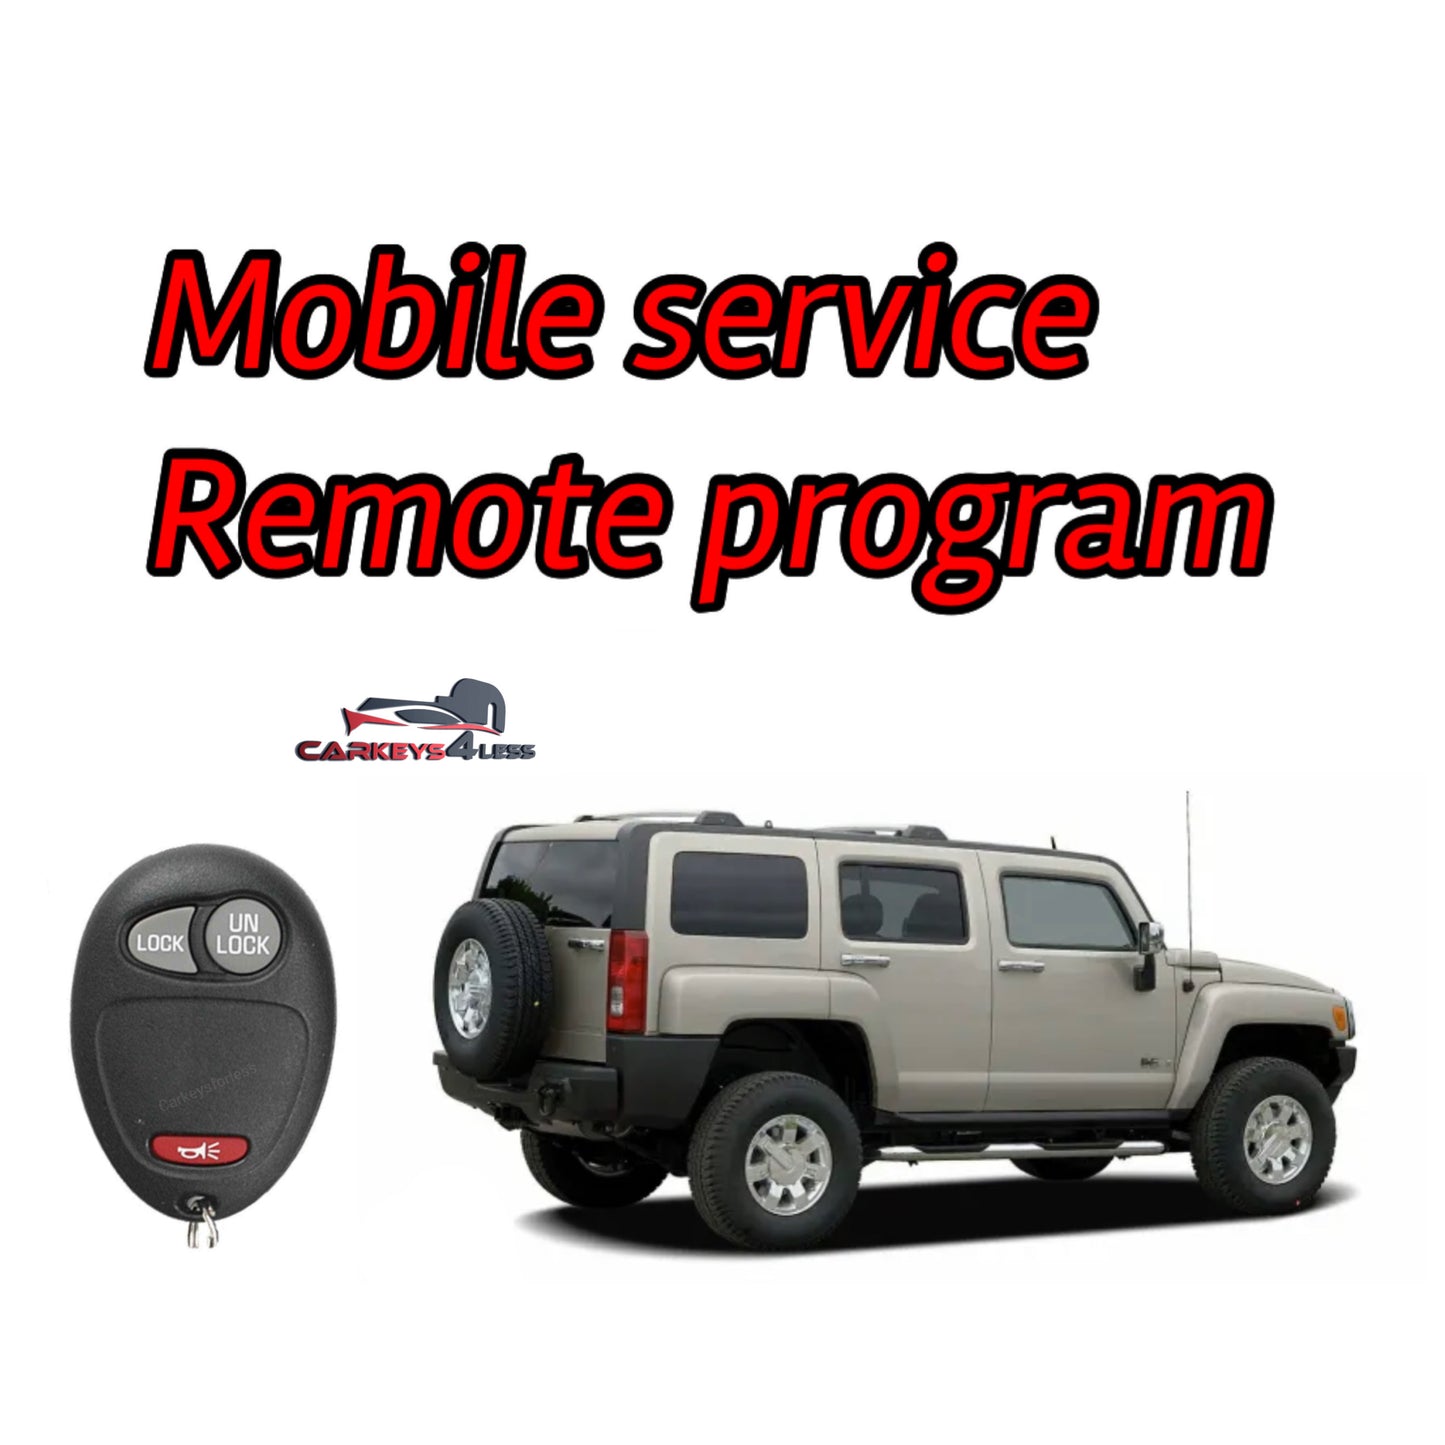 Mobile service for an aftermarket gm remote program